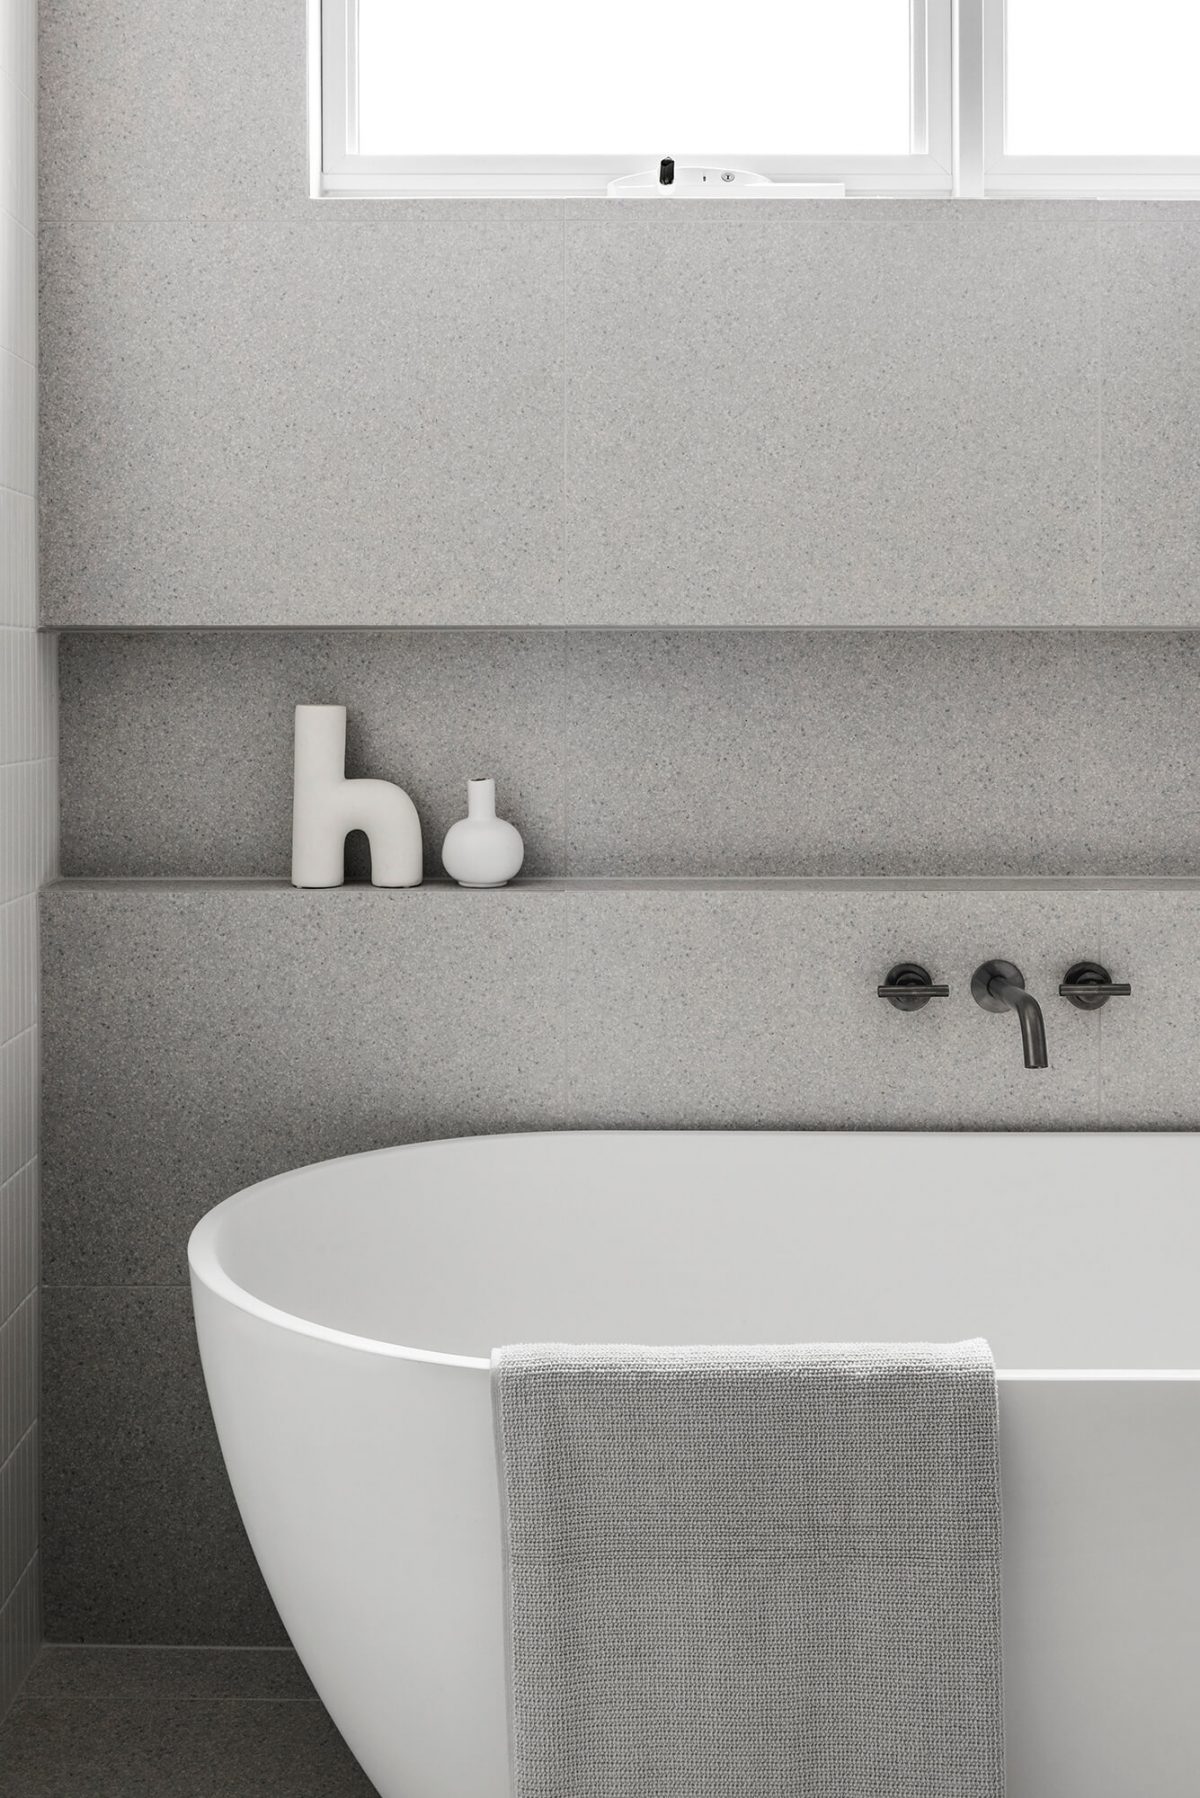 Bathroom renovation free standing bath tub with in wall niche, brushed gun metal tapware